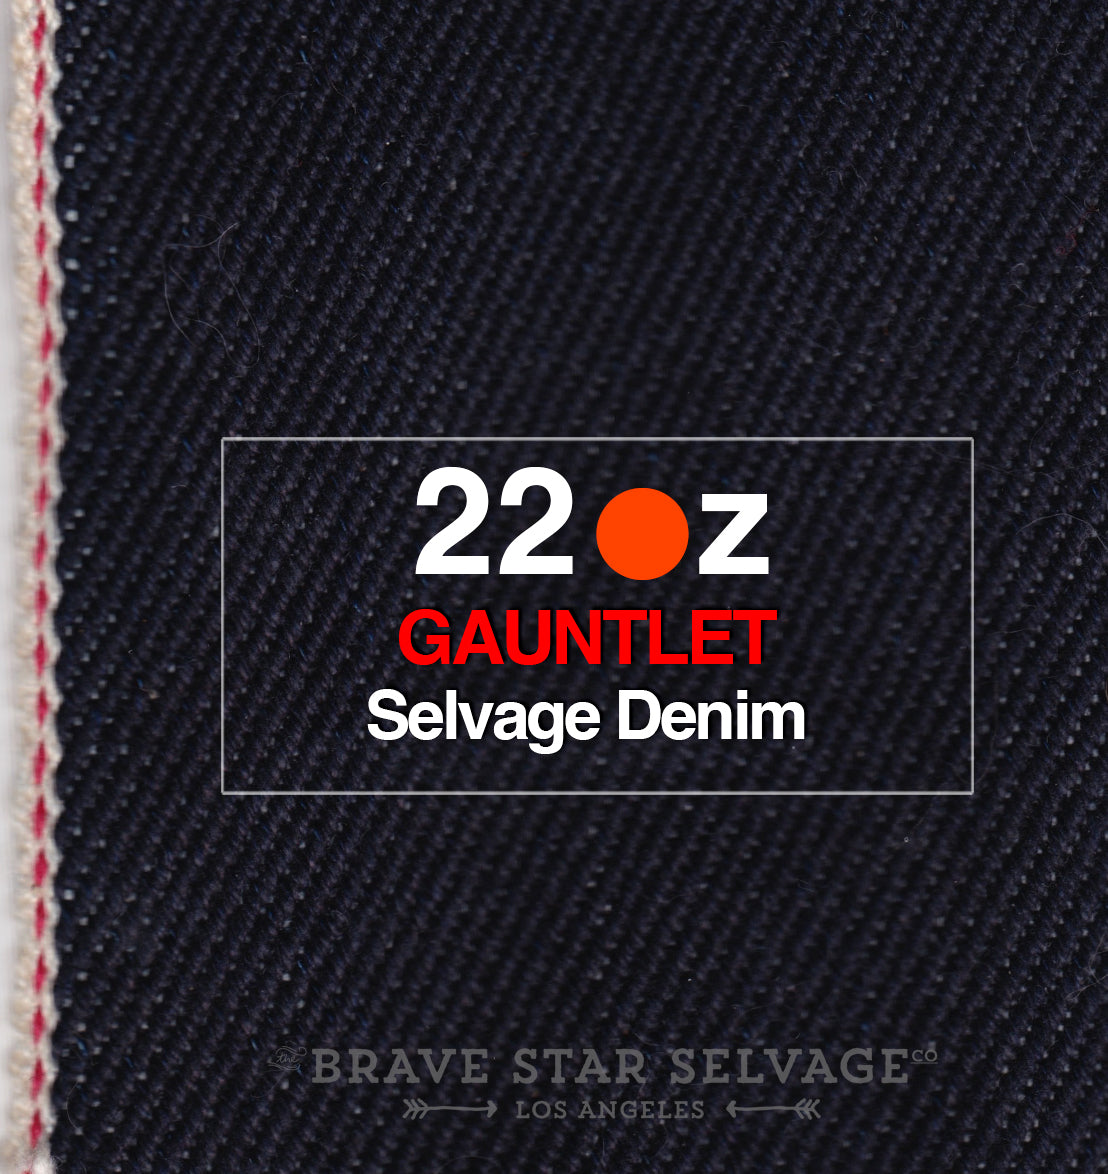 The Ironside 22oz 'Gauntlet' Selvage Denim Jacket